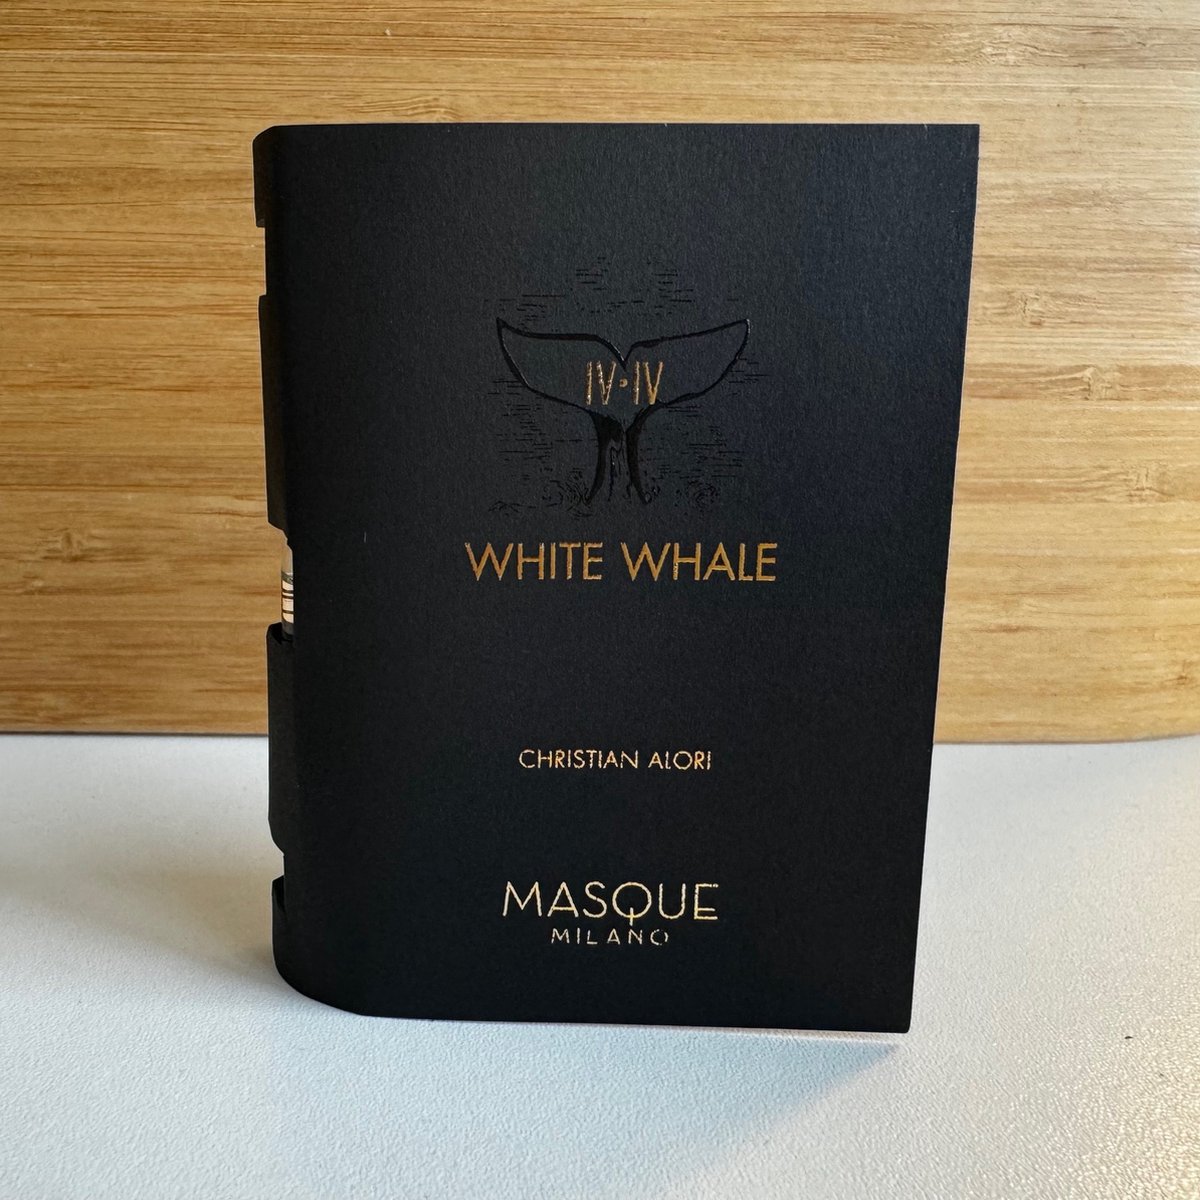 Masque Milano - White Whale - 2ml Original Sample